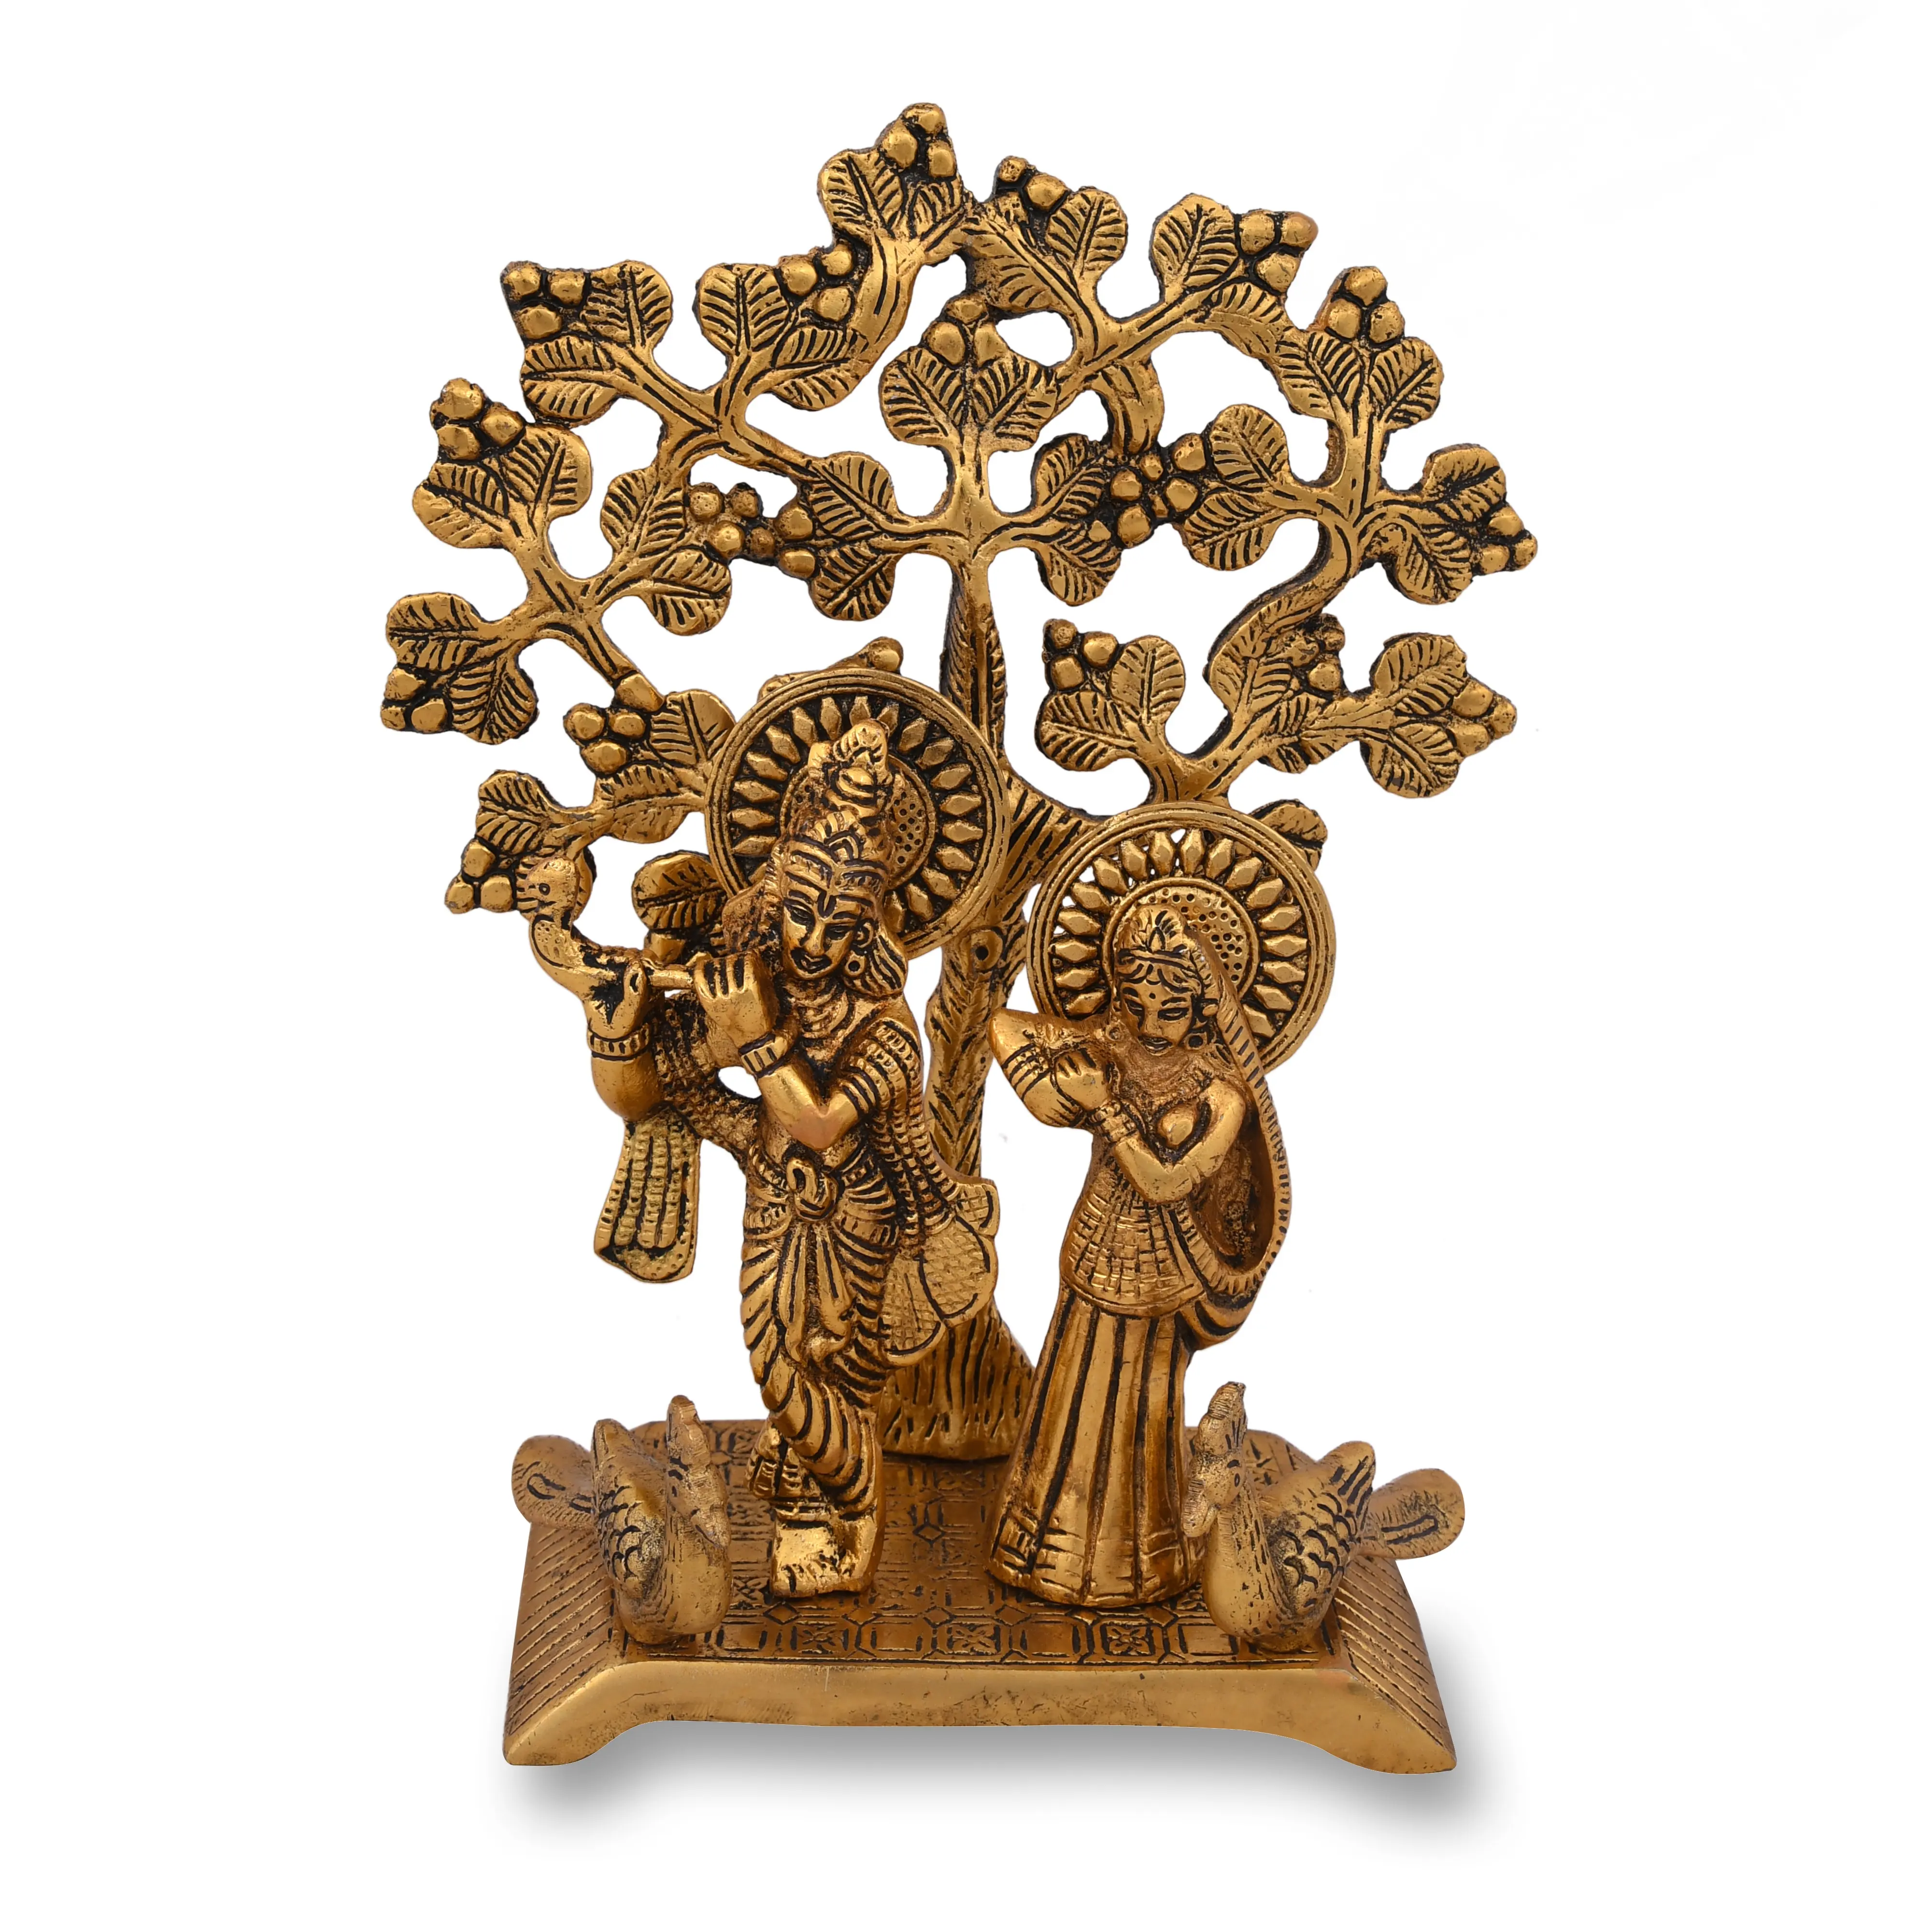 Keluaran Baru Patung Radha Krishna Buatan Tangan Berlapis Emas dengan Patung Desain Pohon Sisi Belakang untuk Dekorasi Rumah dan Pemberian Hadiah